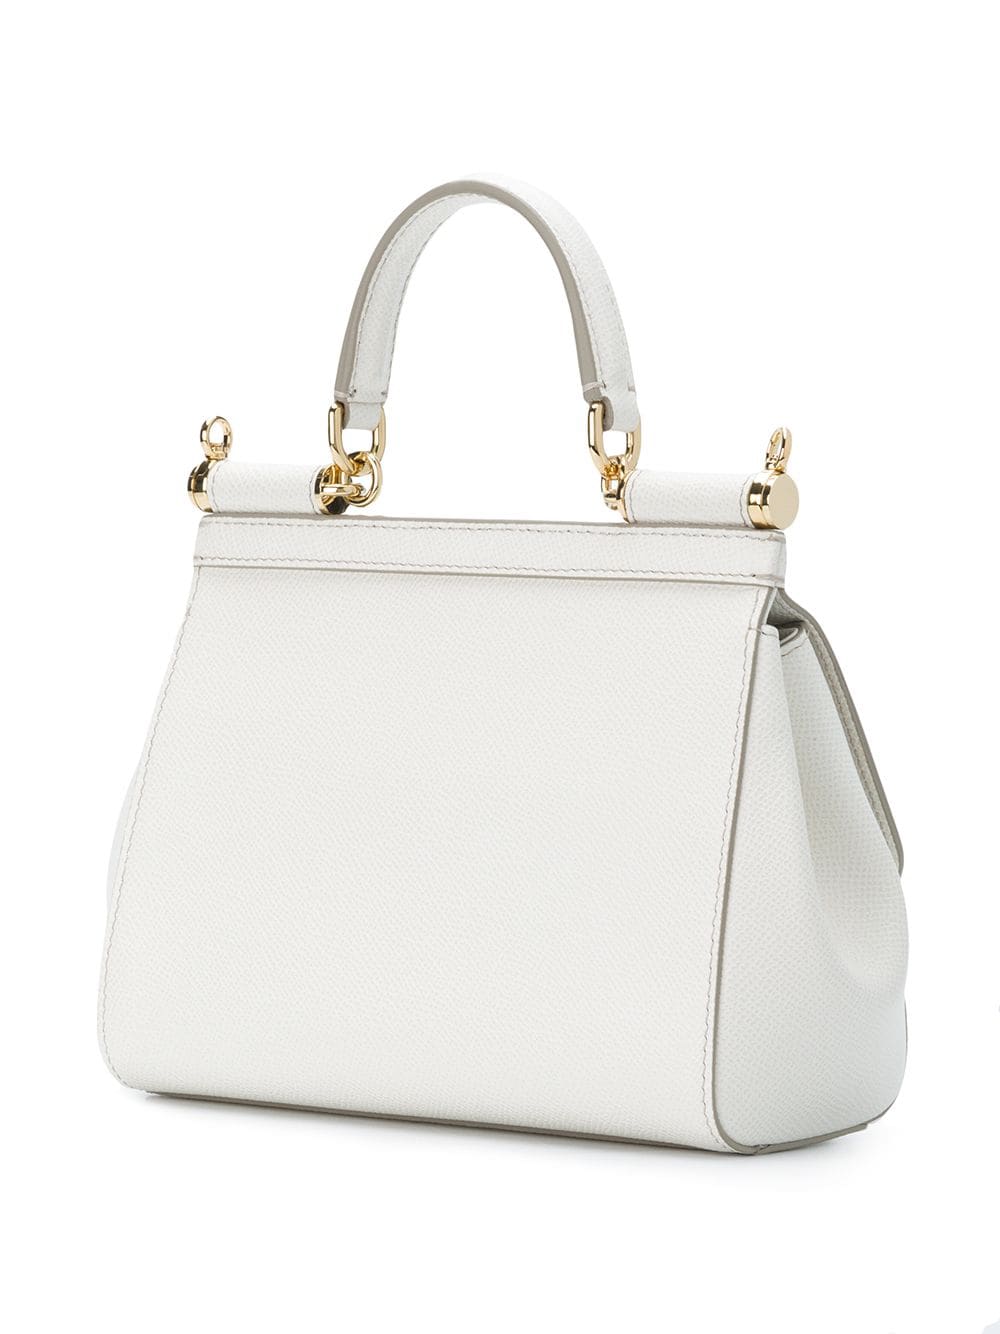 Dolce & Gabbana Sicily Small leather shoulder bag - ShopStyle